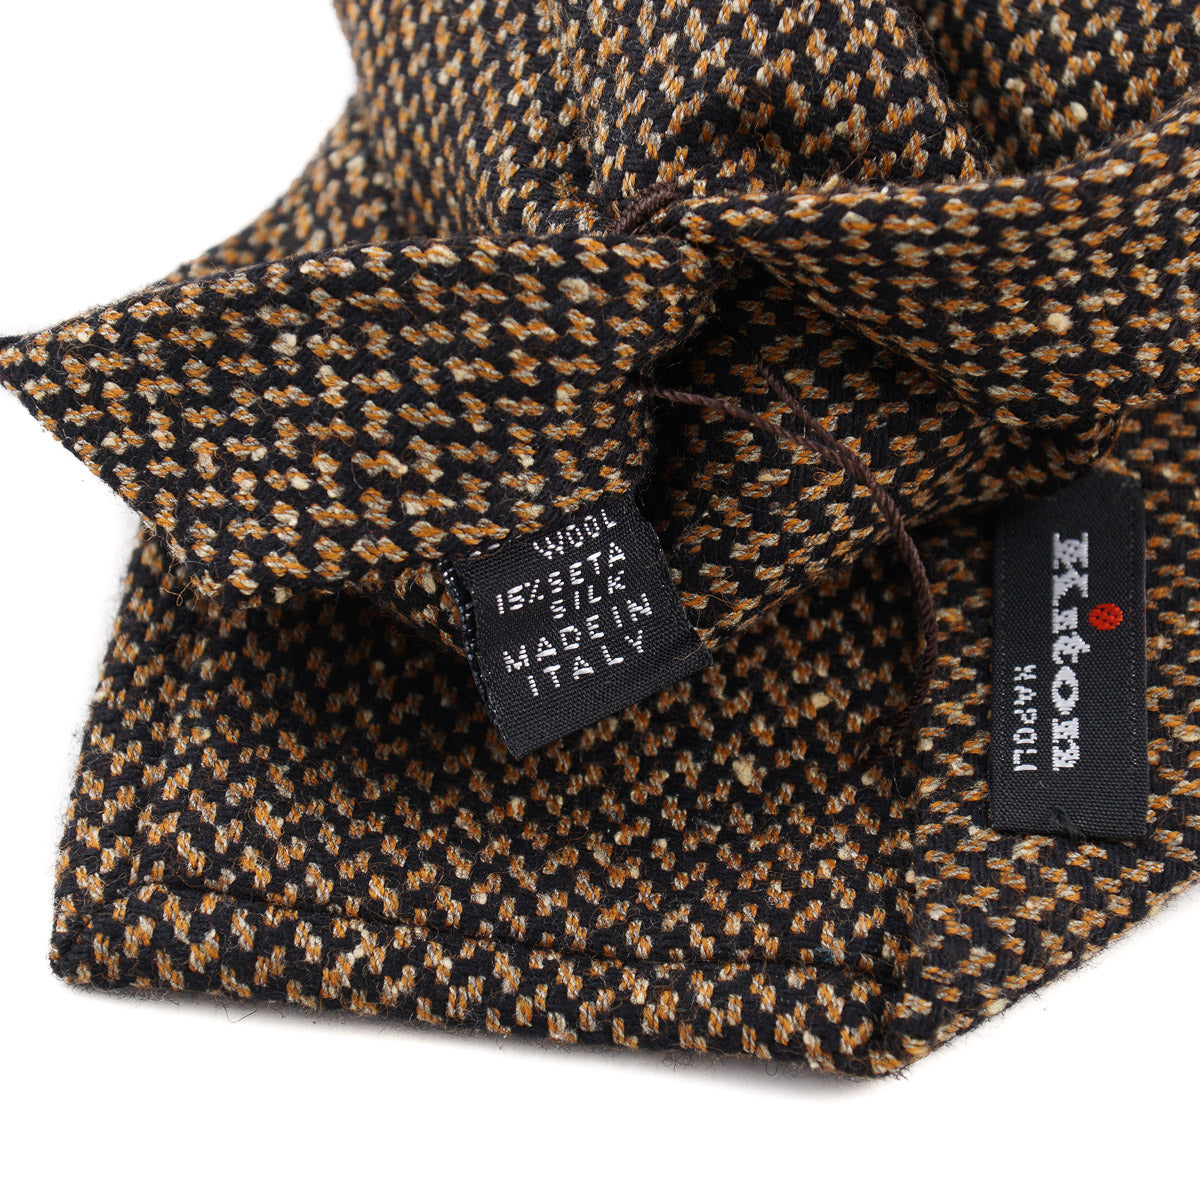 Kiton Woven Wool and Silk Necktie - Top Shelf Apparel